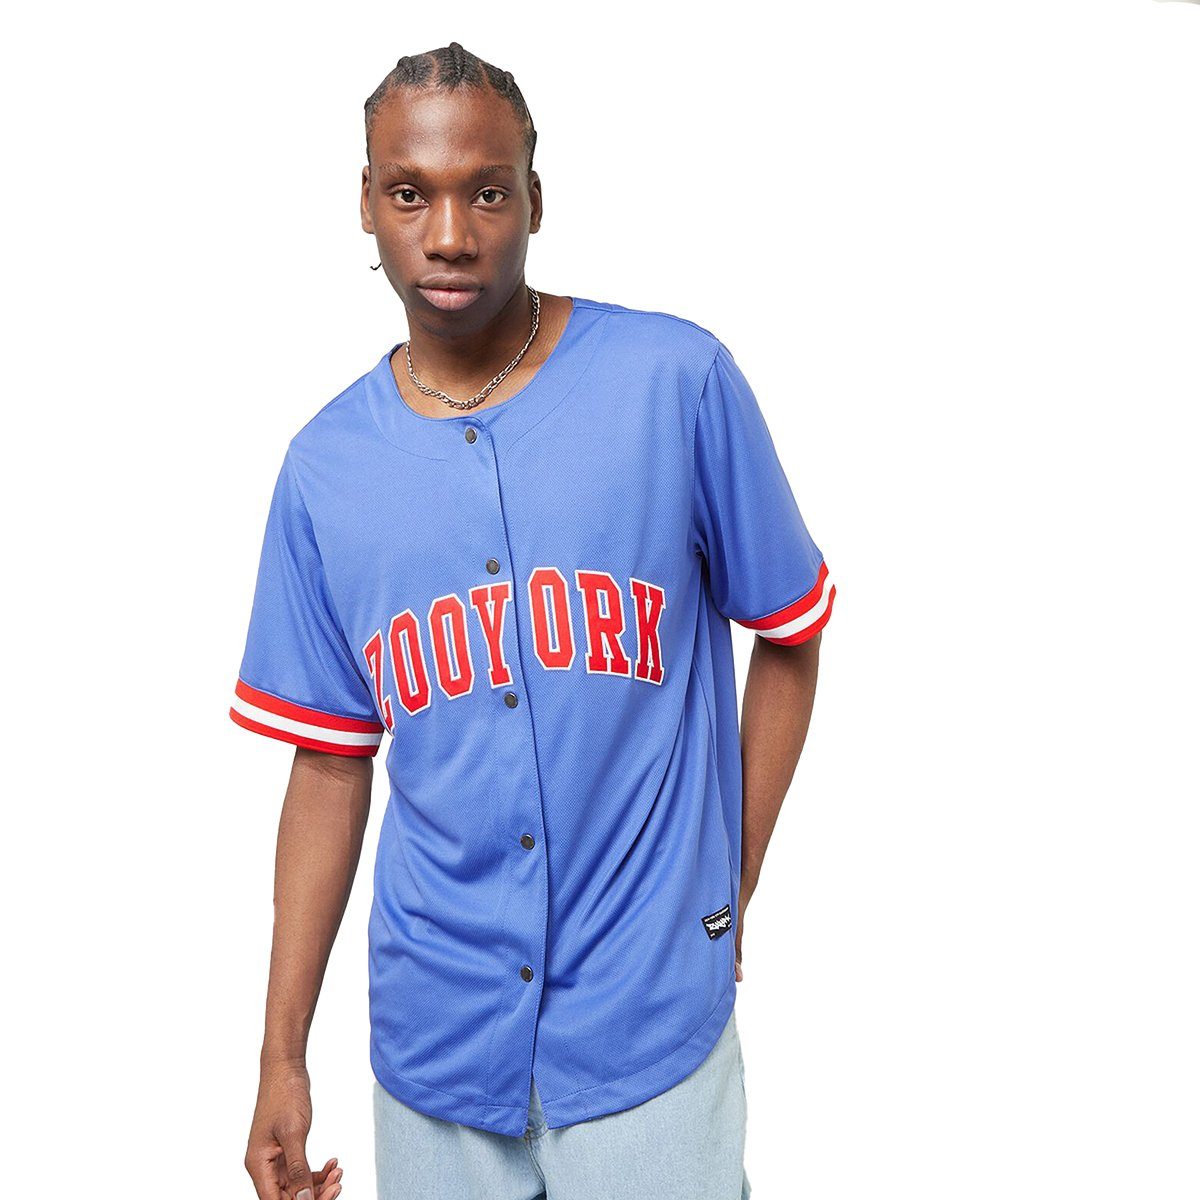 Zoo York T-Shirt Baseball Jersey